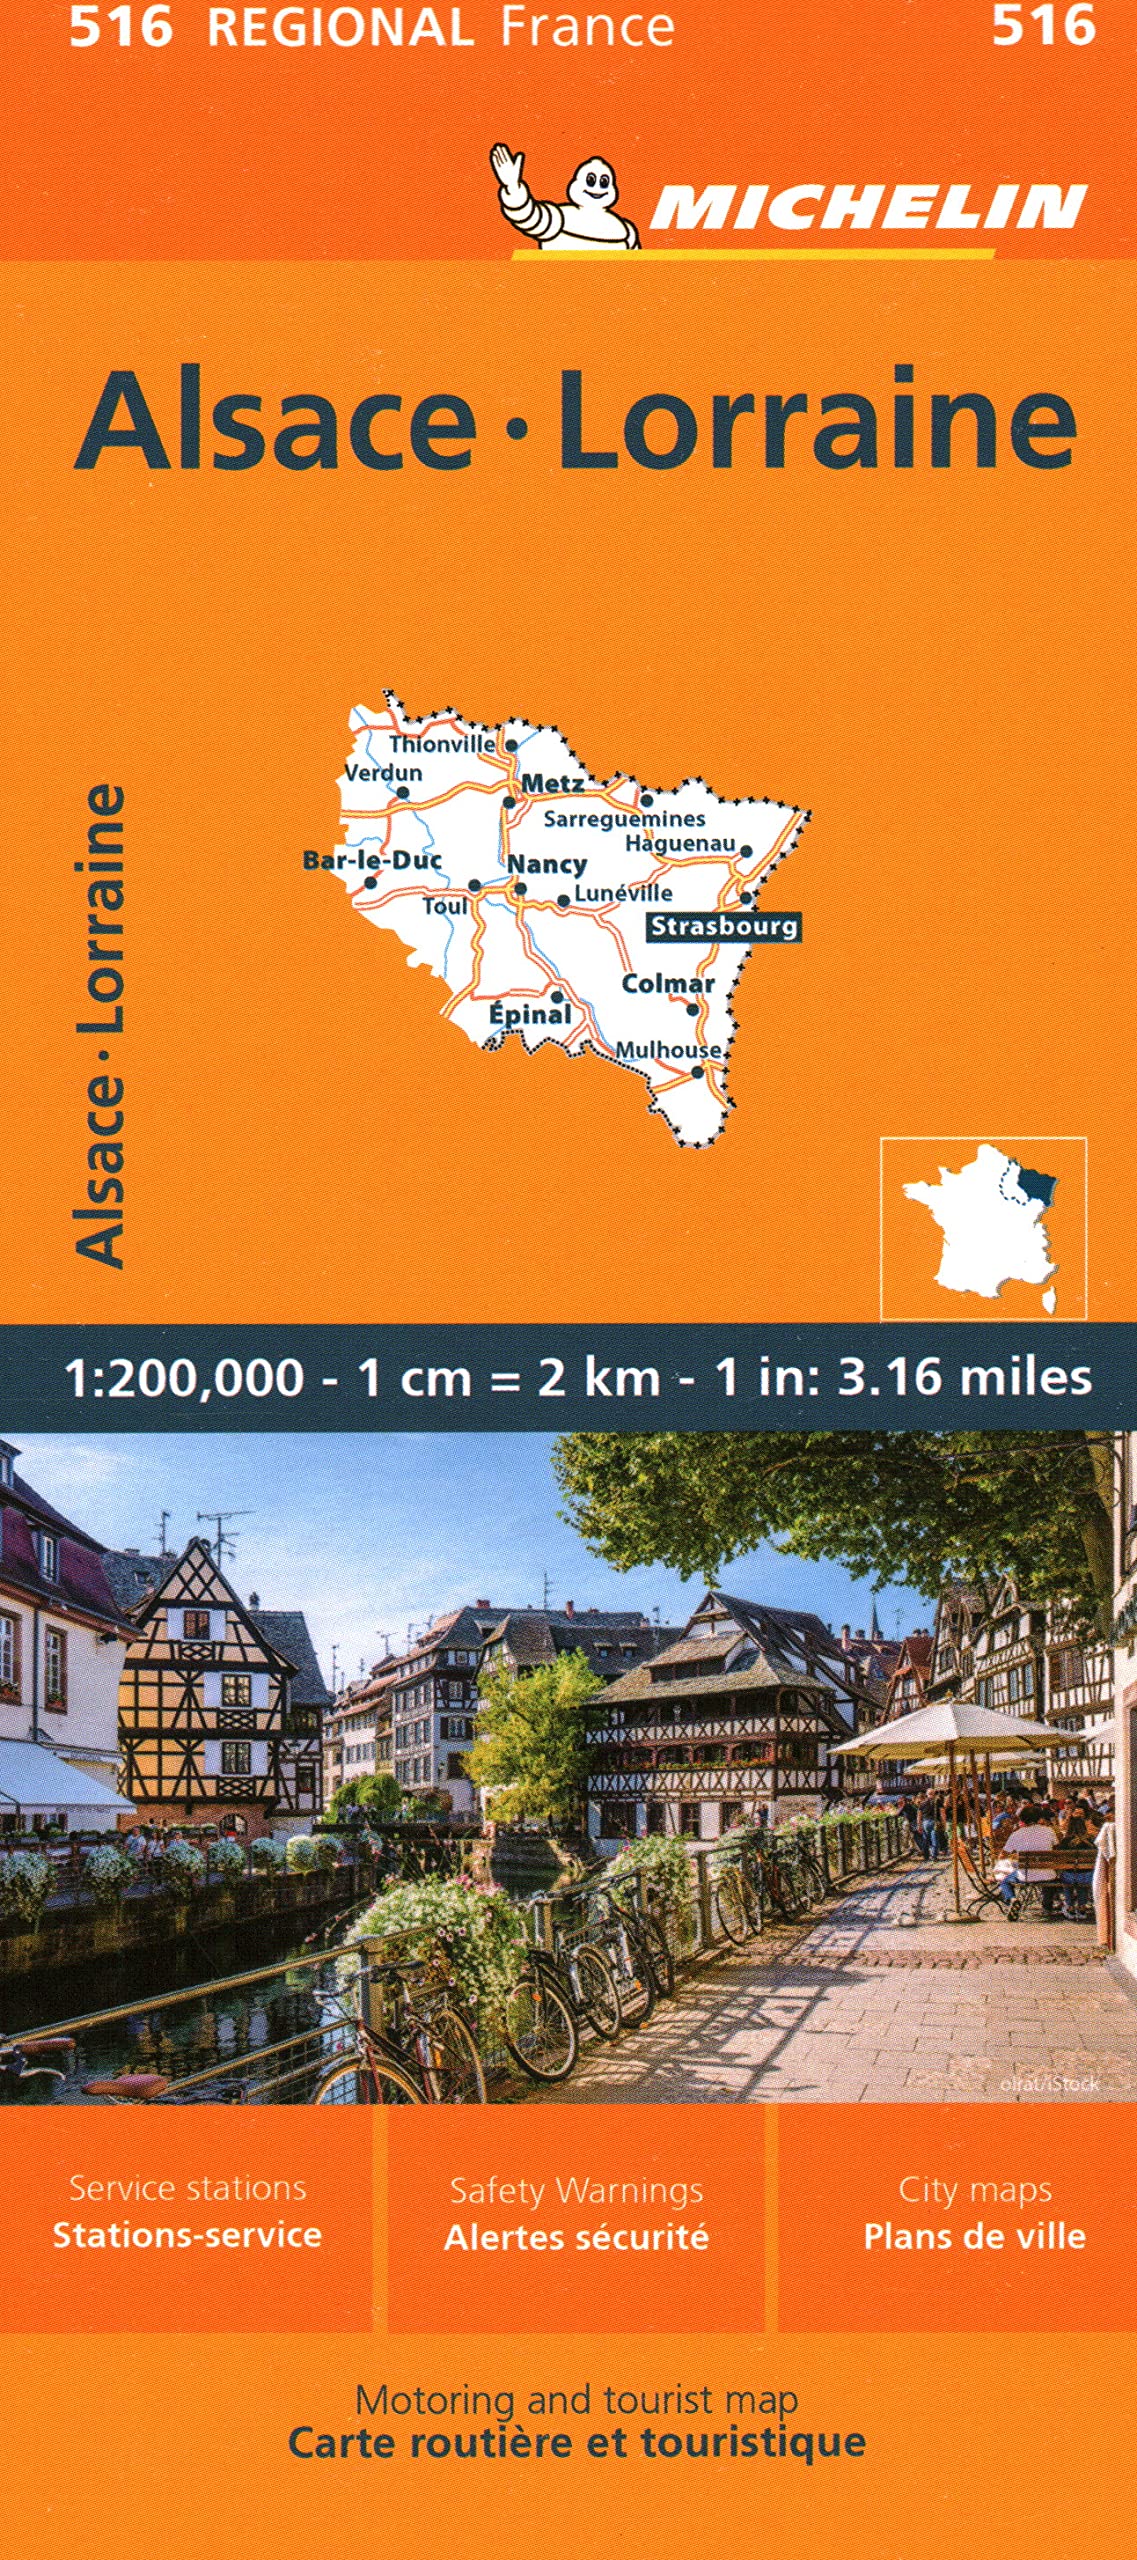 Alsace, Lorraine 516